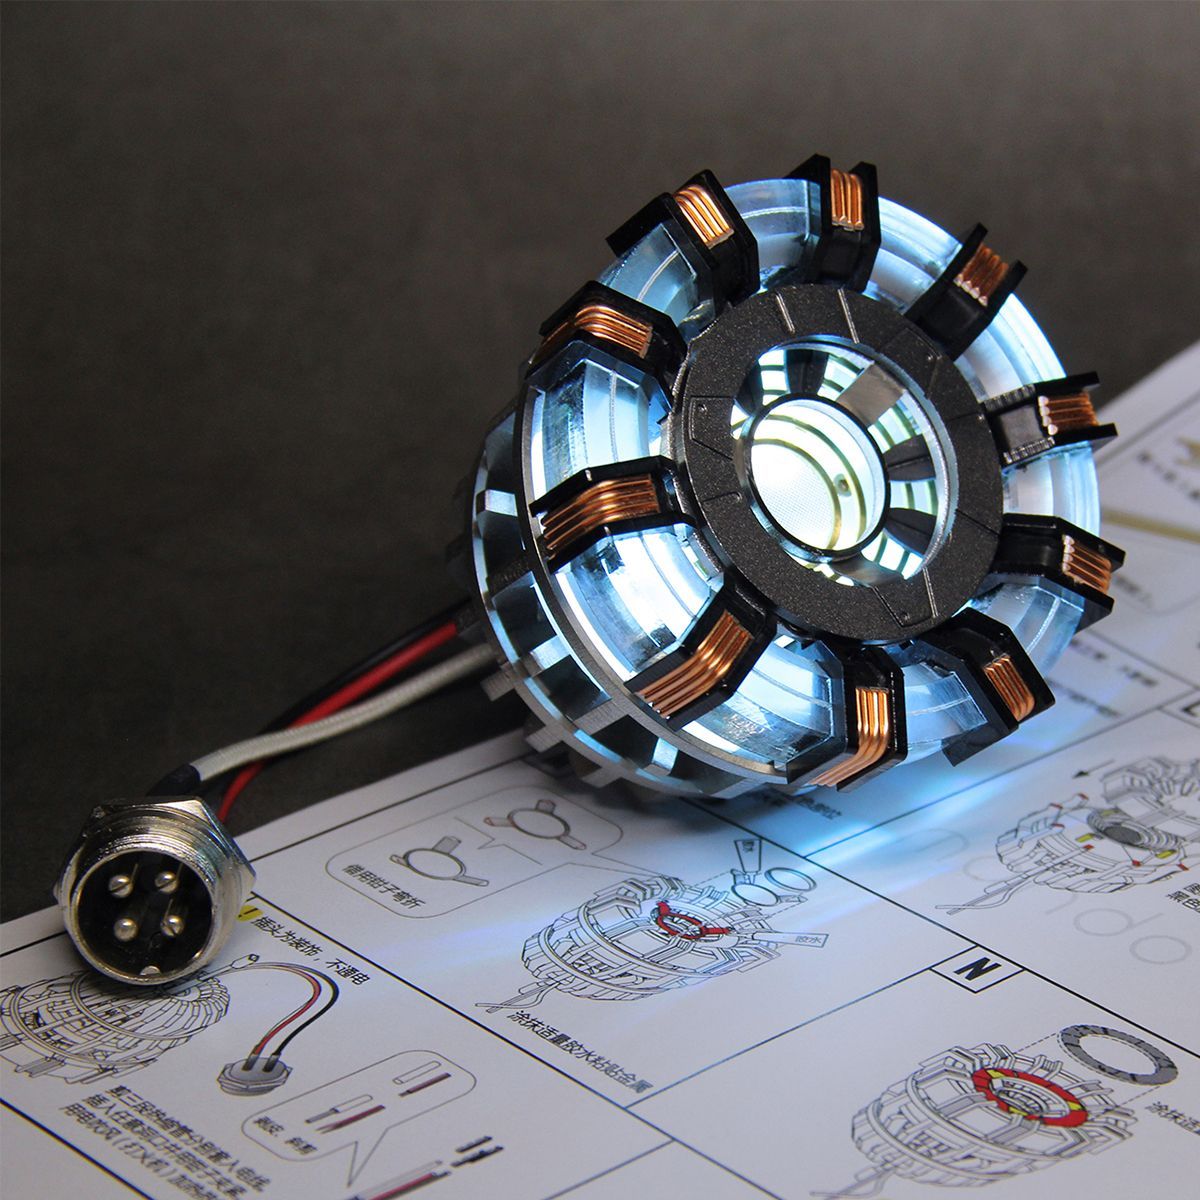 MK2-Tony-DIY-Arc-Reactor-Lamp-Stainless-Steel-Kit-Illuminant-LED-Flash-Light-Set-1429464